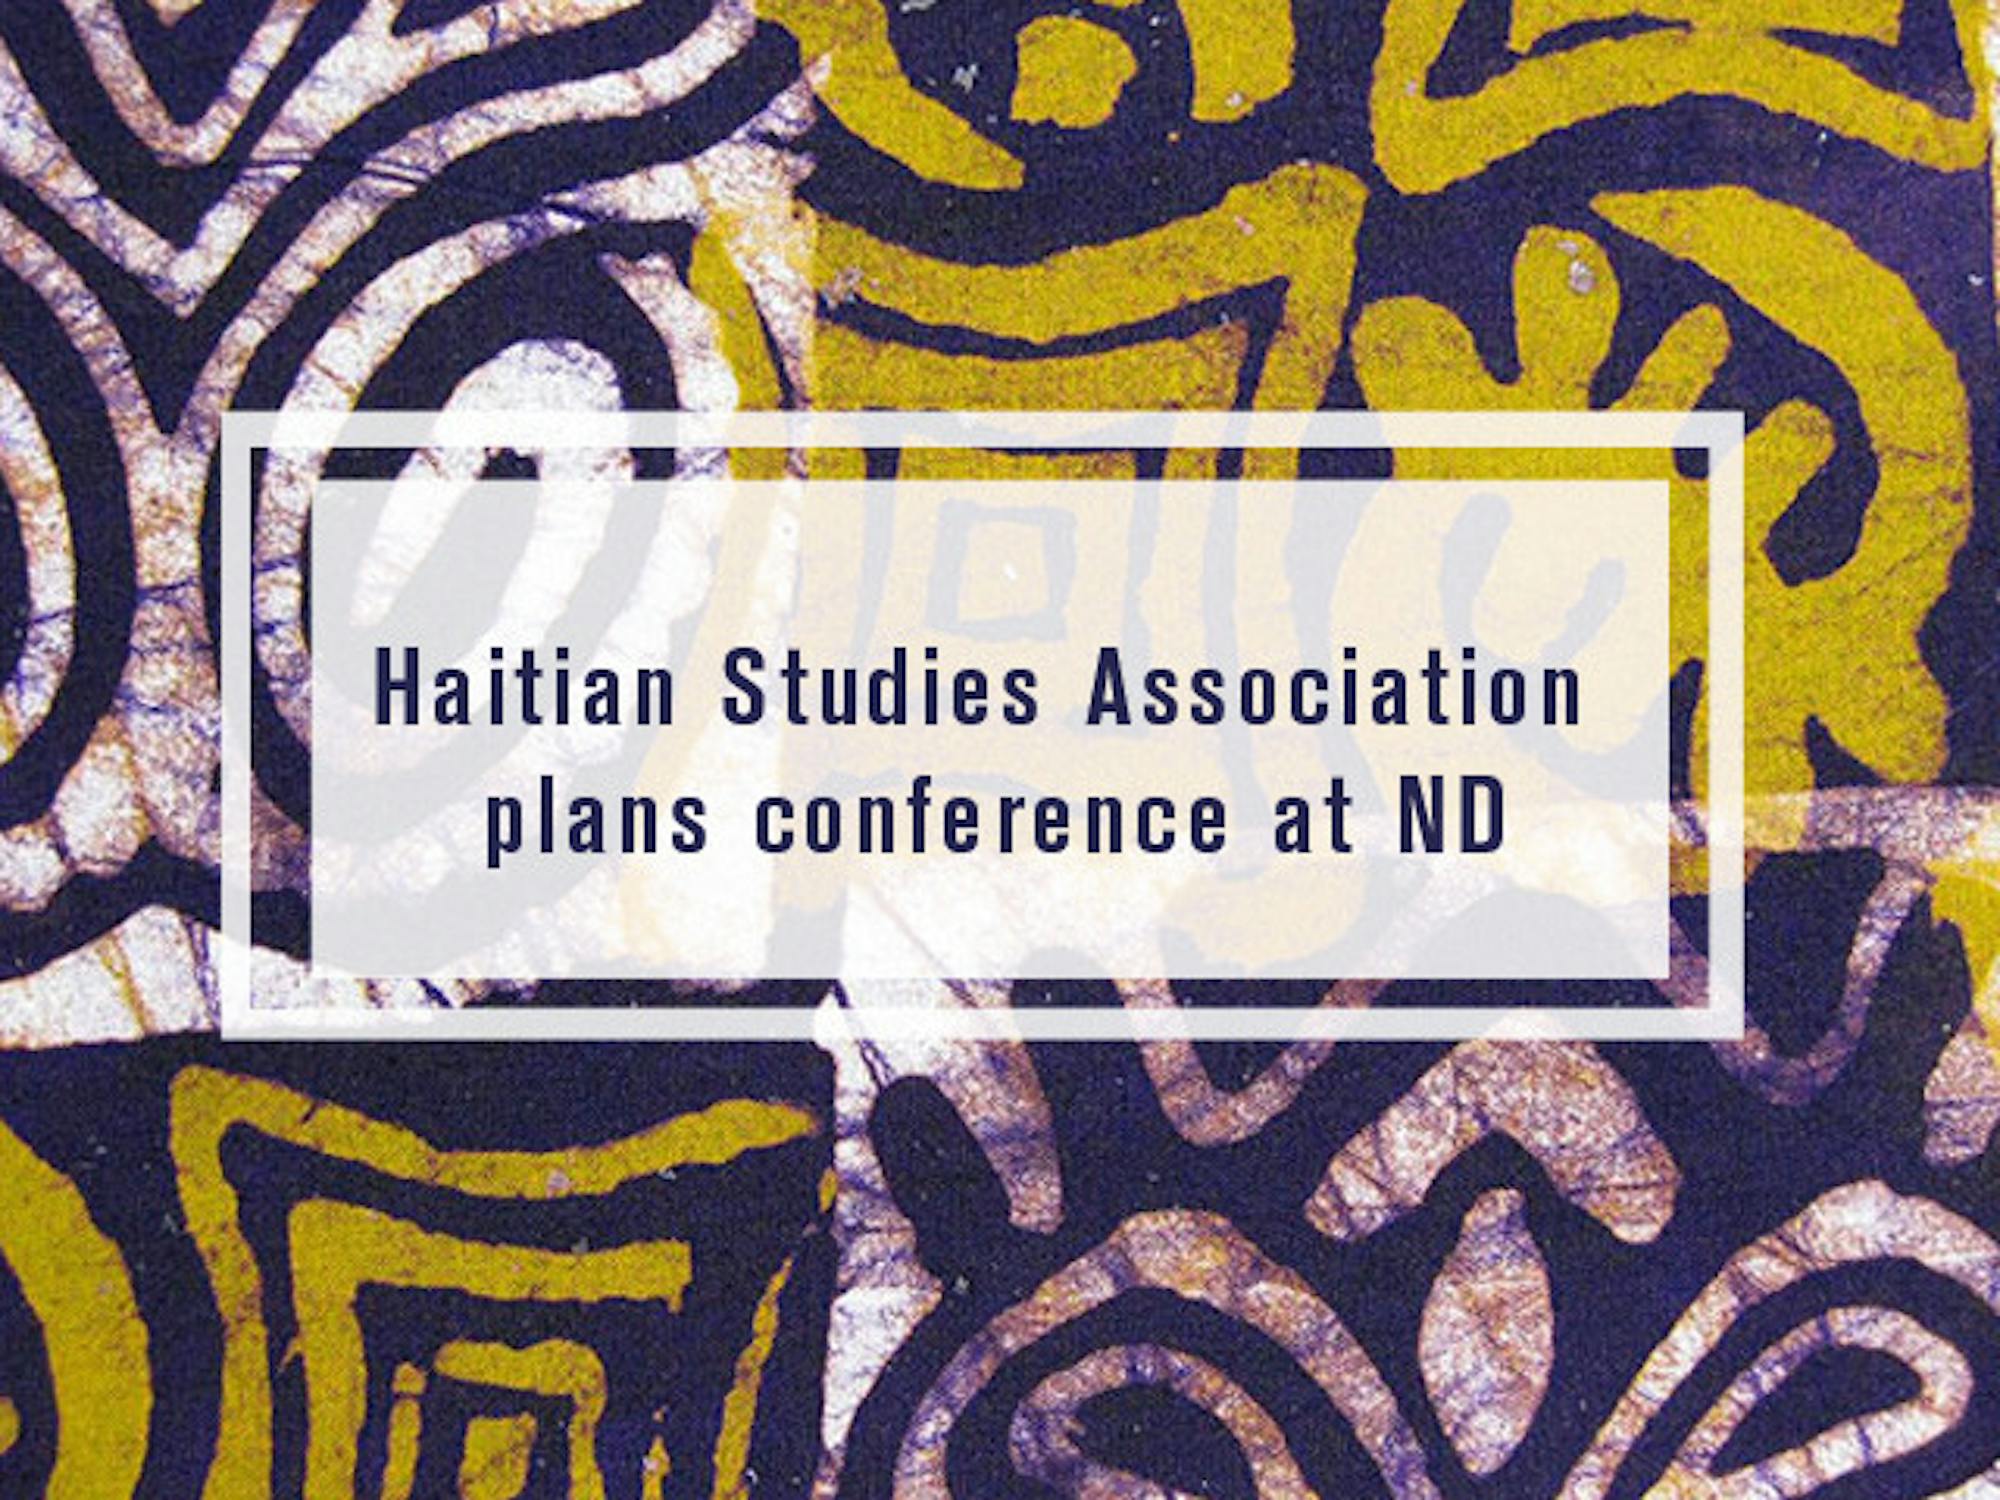 web_haitian studies conference_11-6-2014